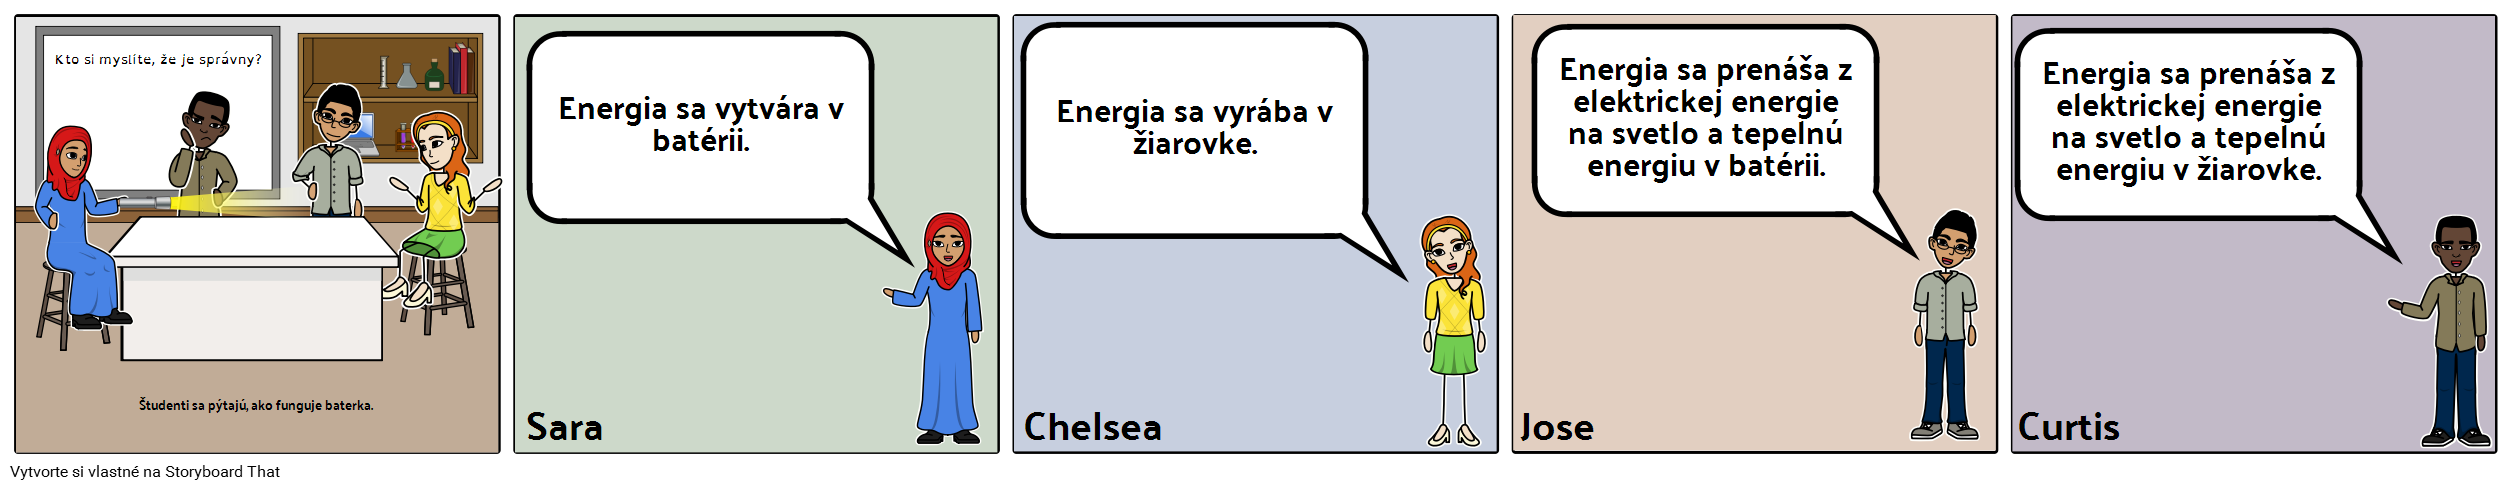 Diskusia Storyboard - ES - Energia